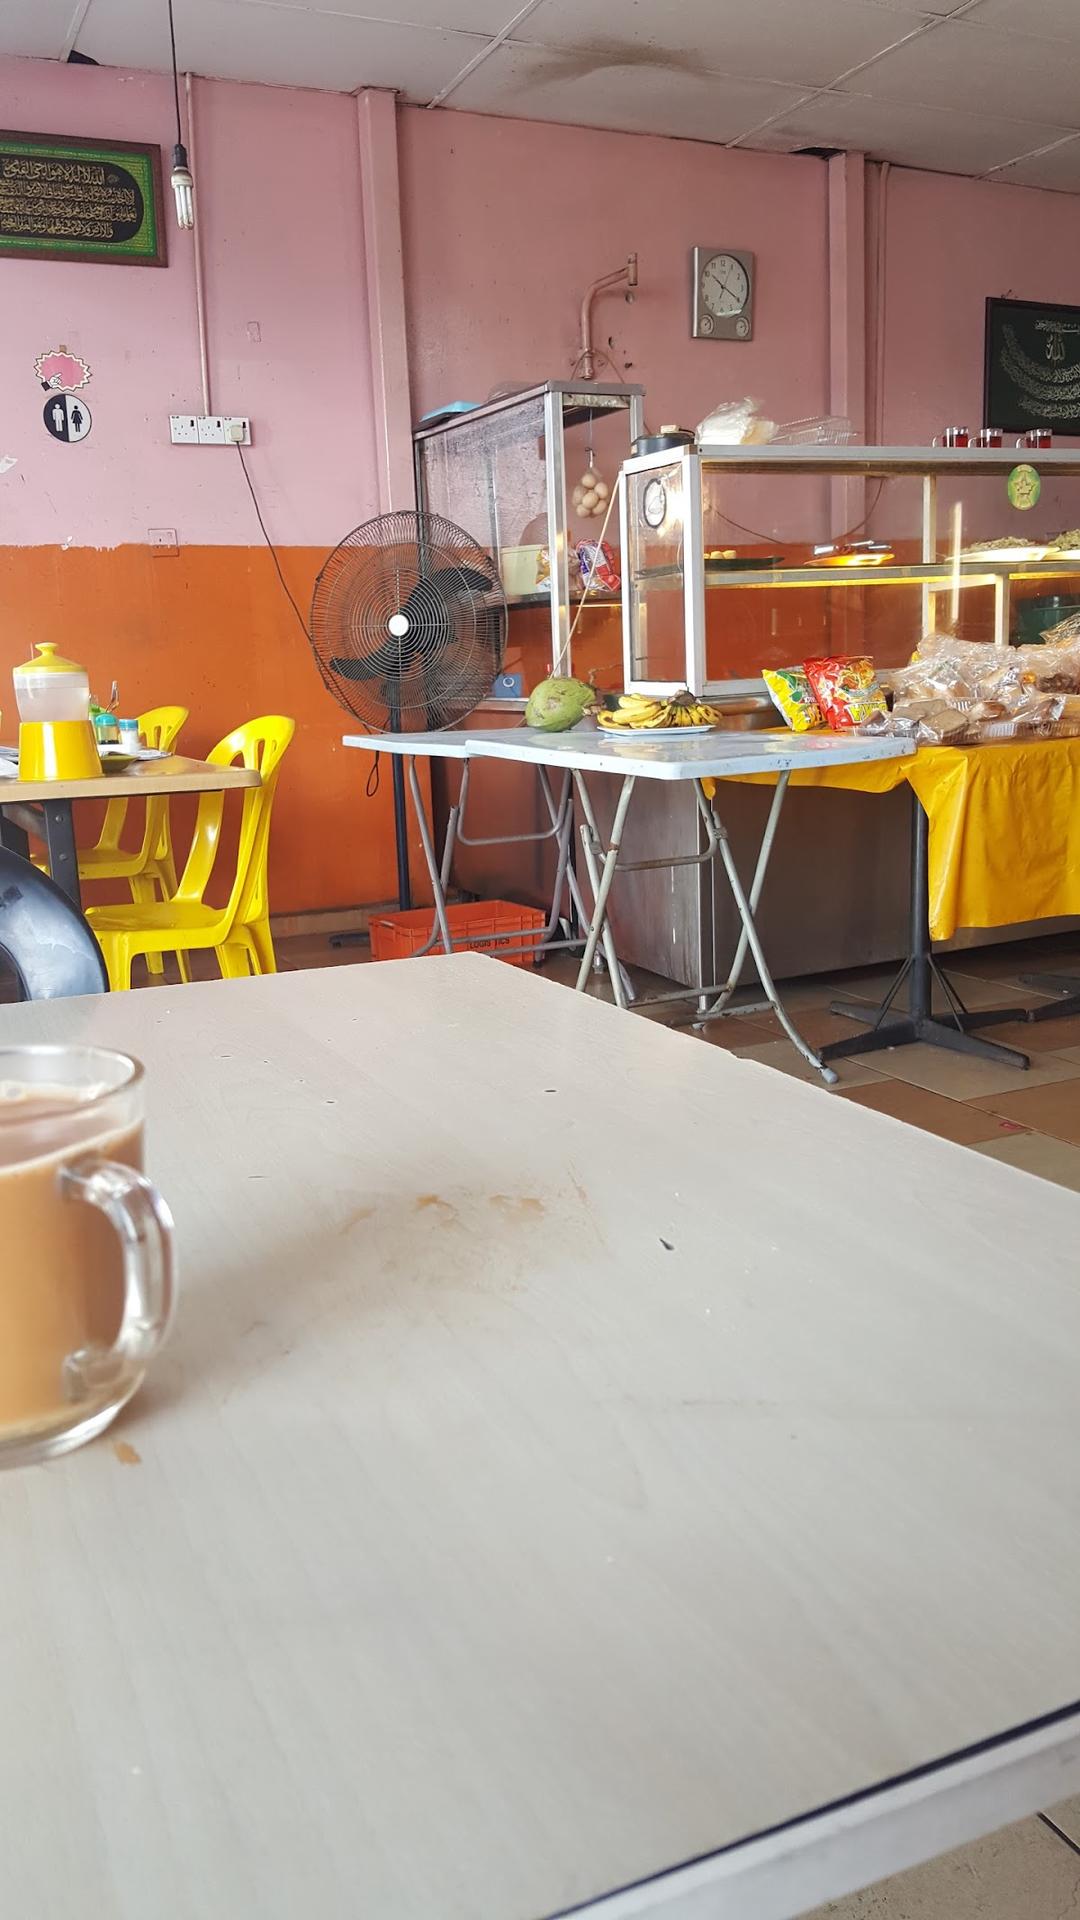 Photo of S.R Bintang Food Cafe - Subang Jaya, Selangor, Malaysia